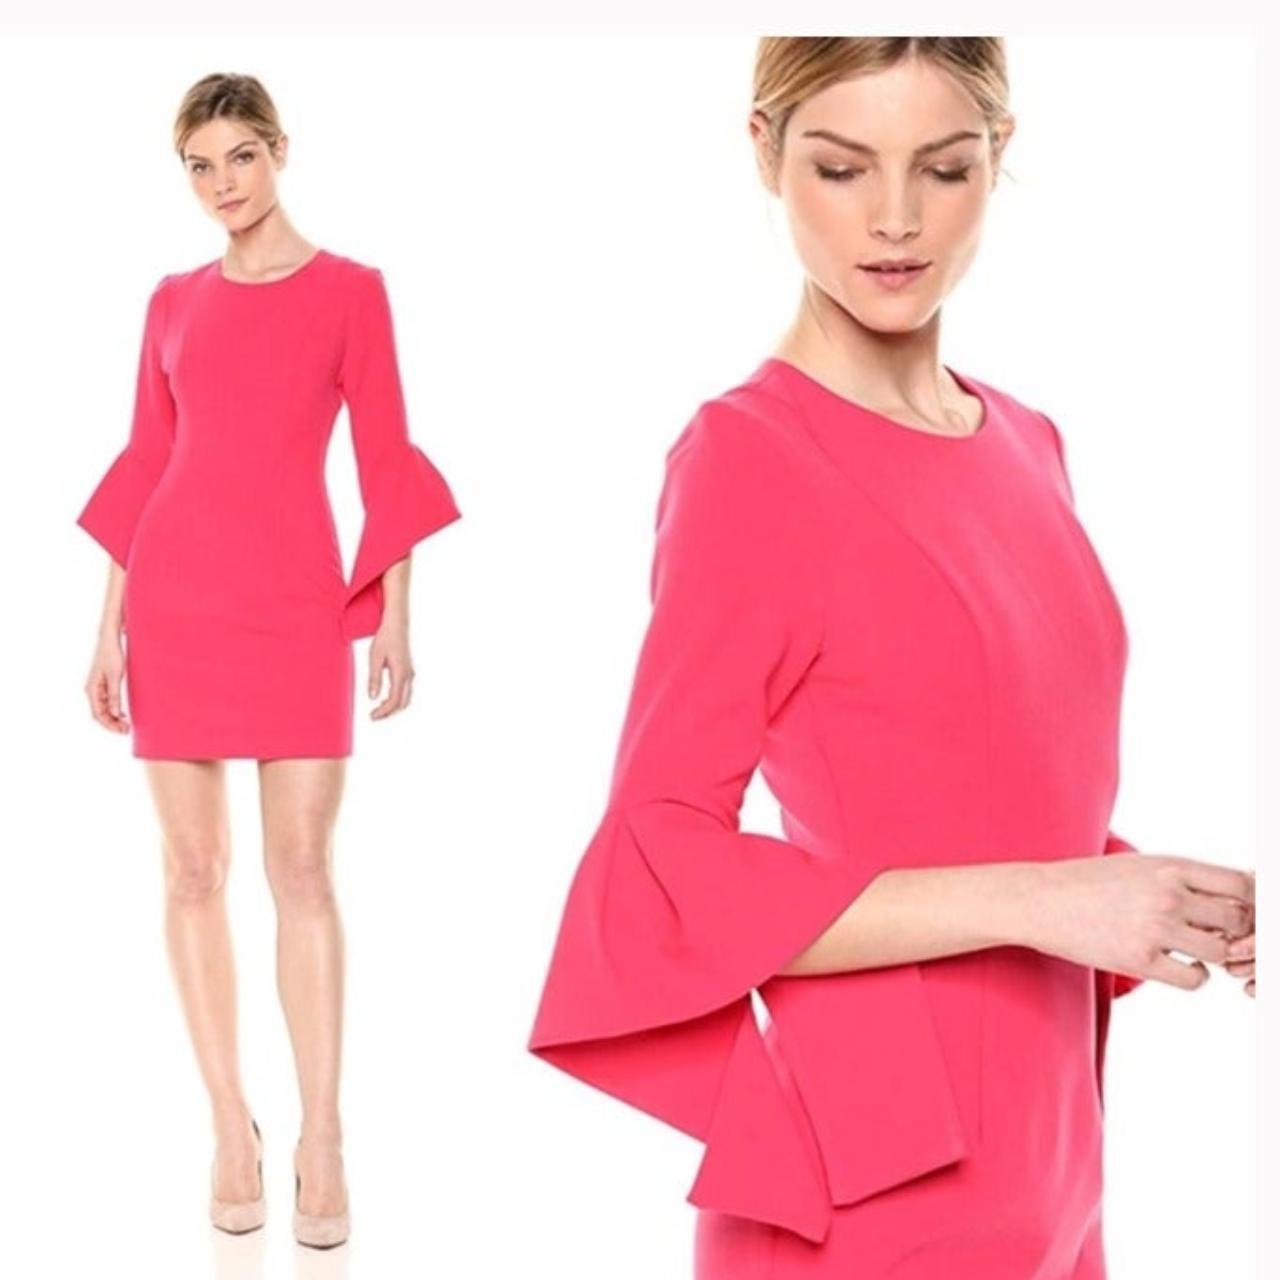 BHS Women's Pink and Orange Dress | Depop